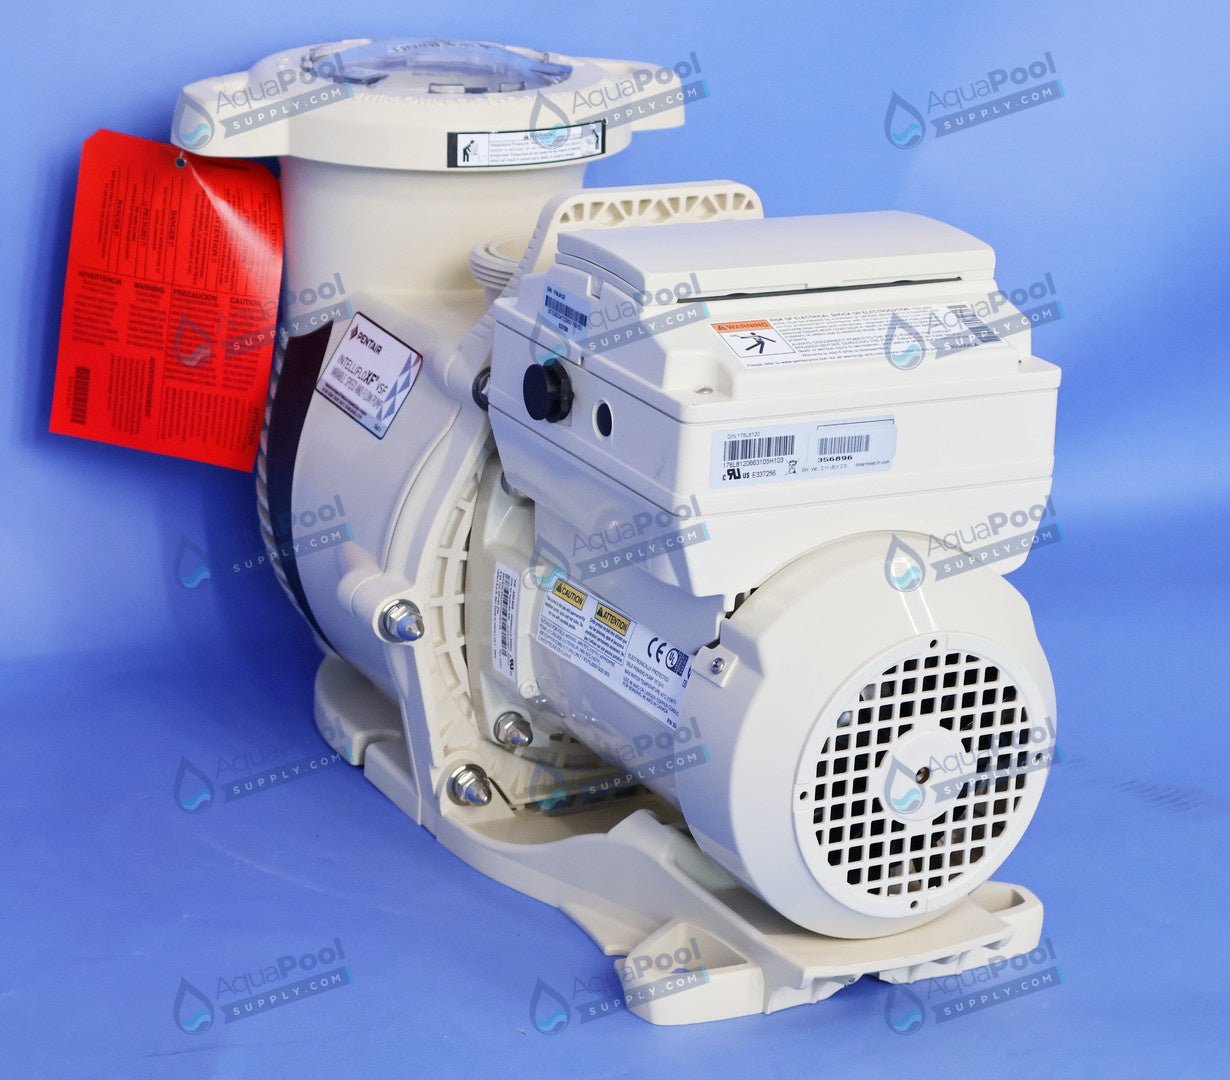 IntelliFloXF VSF Variable Speed and Flow Pump EC-022055 - Variable Speed Pumps